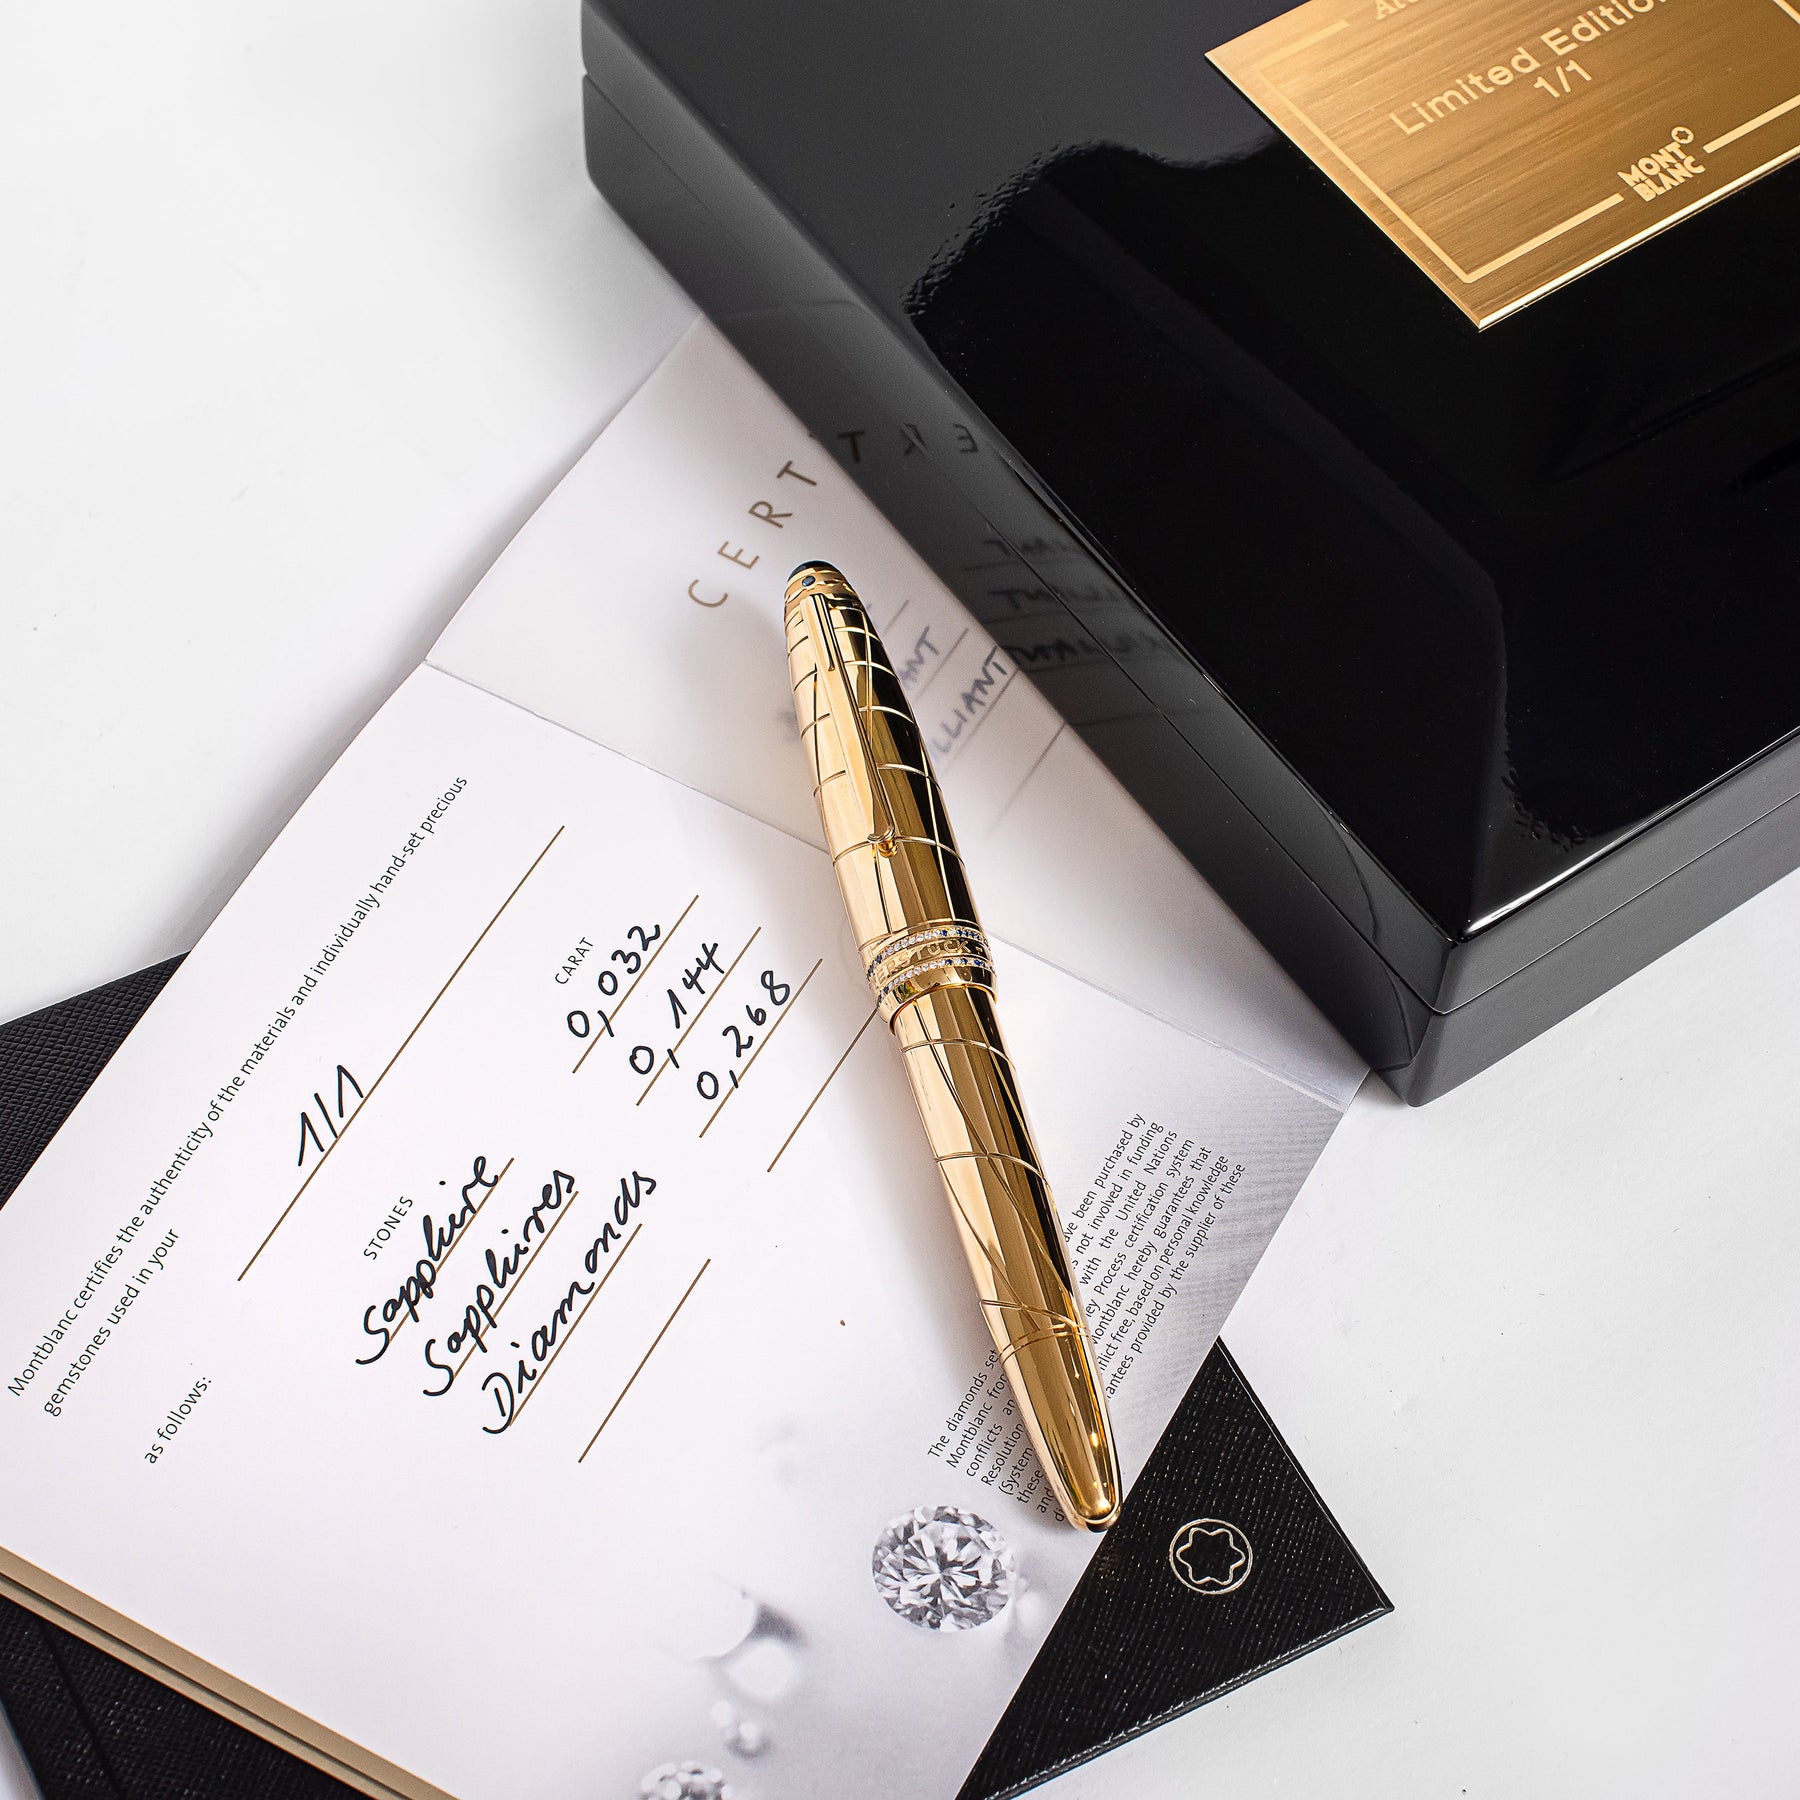 Scriveiner Black Lacquer Rollerball Pen - Stunning Luxury Pen with 24K Gold  Finish, Schmidt Ink Refill, Best Roller Ball Pen Gift Set for Men & Women,  Professional, Executive Office, Nice Pens :